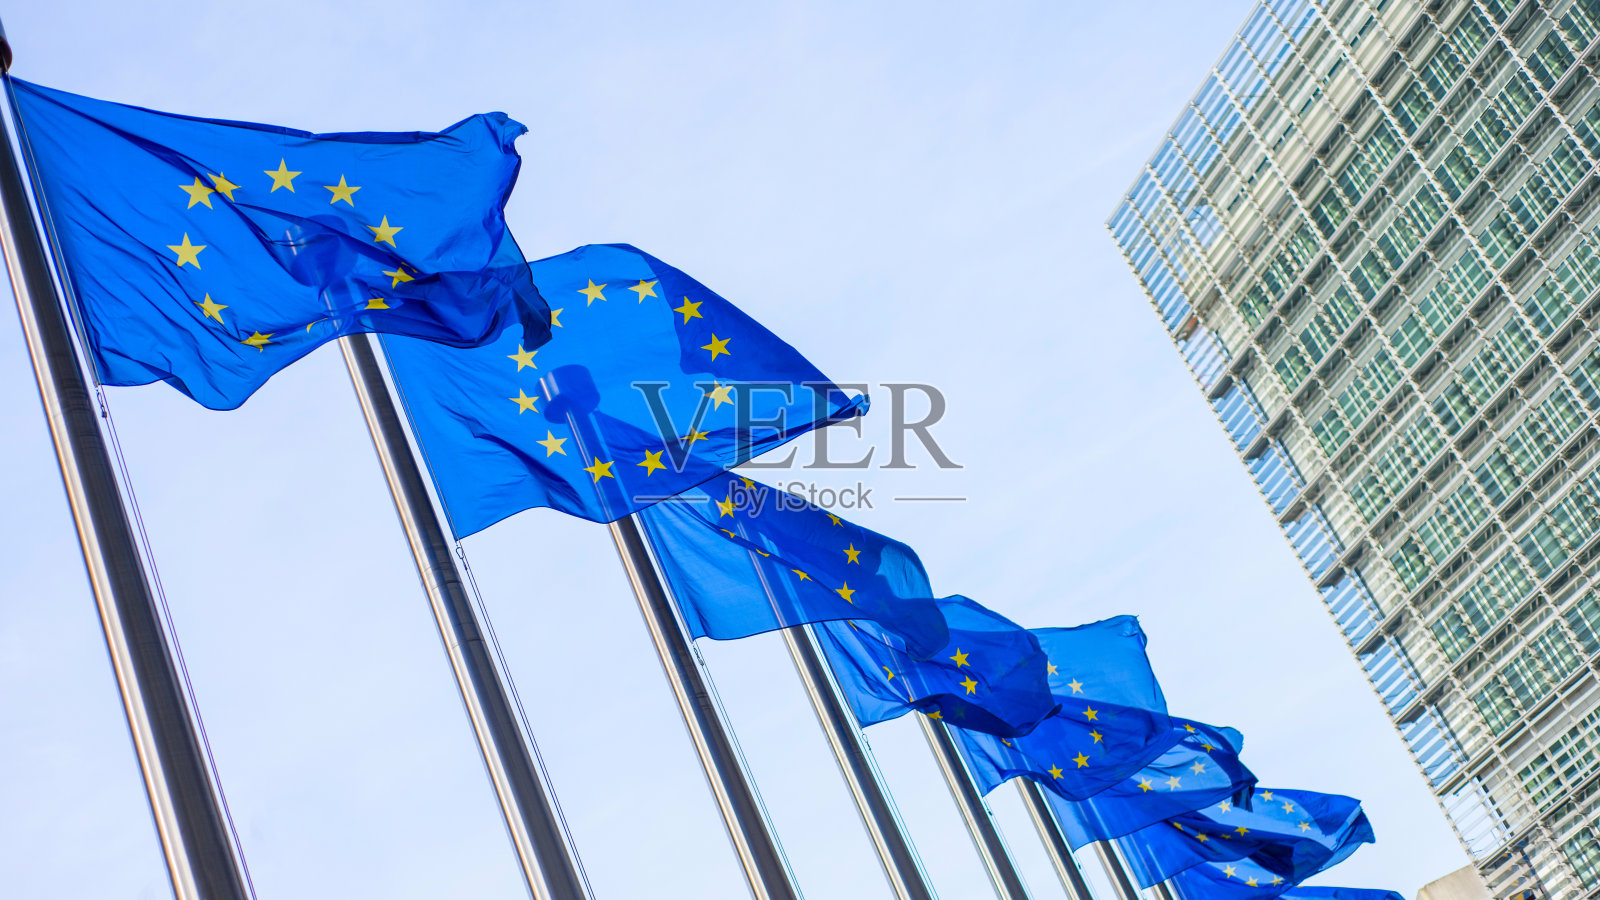 Berlaymont大楼前悬挂着欧盟旗帜照片摄影图片